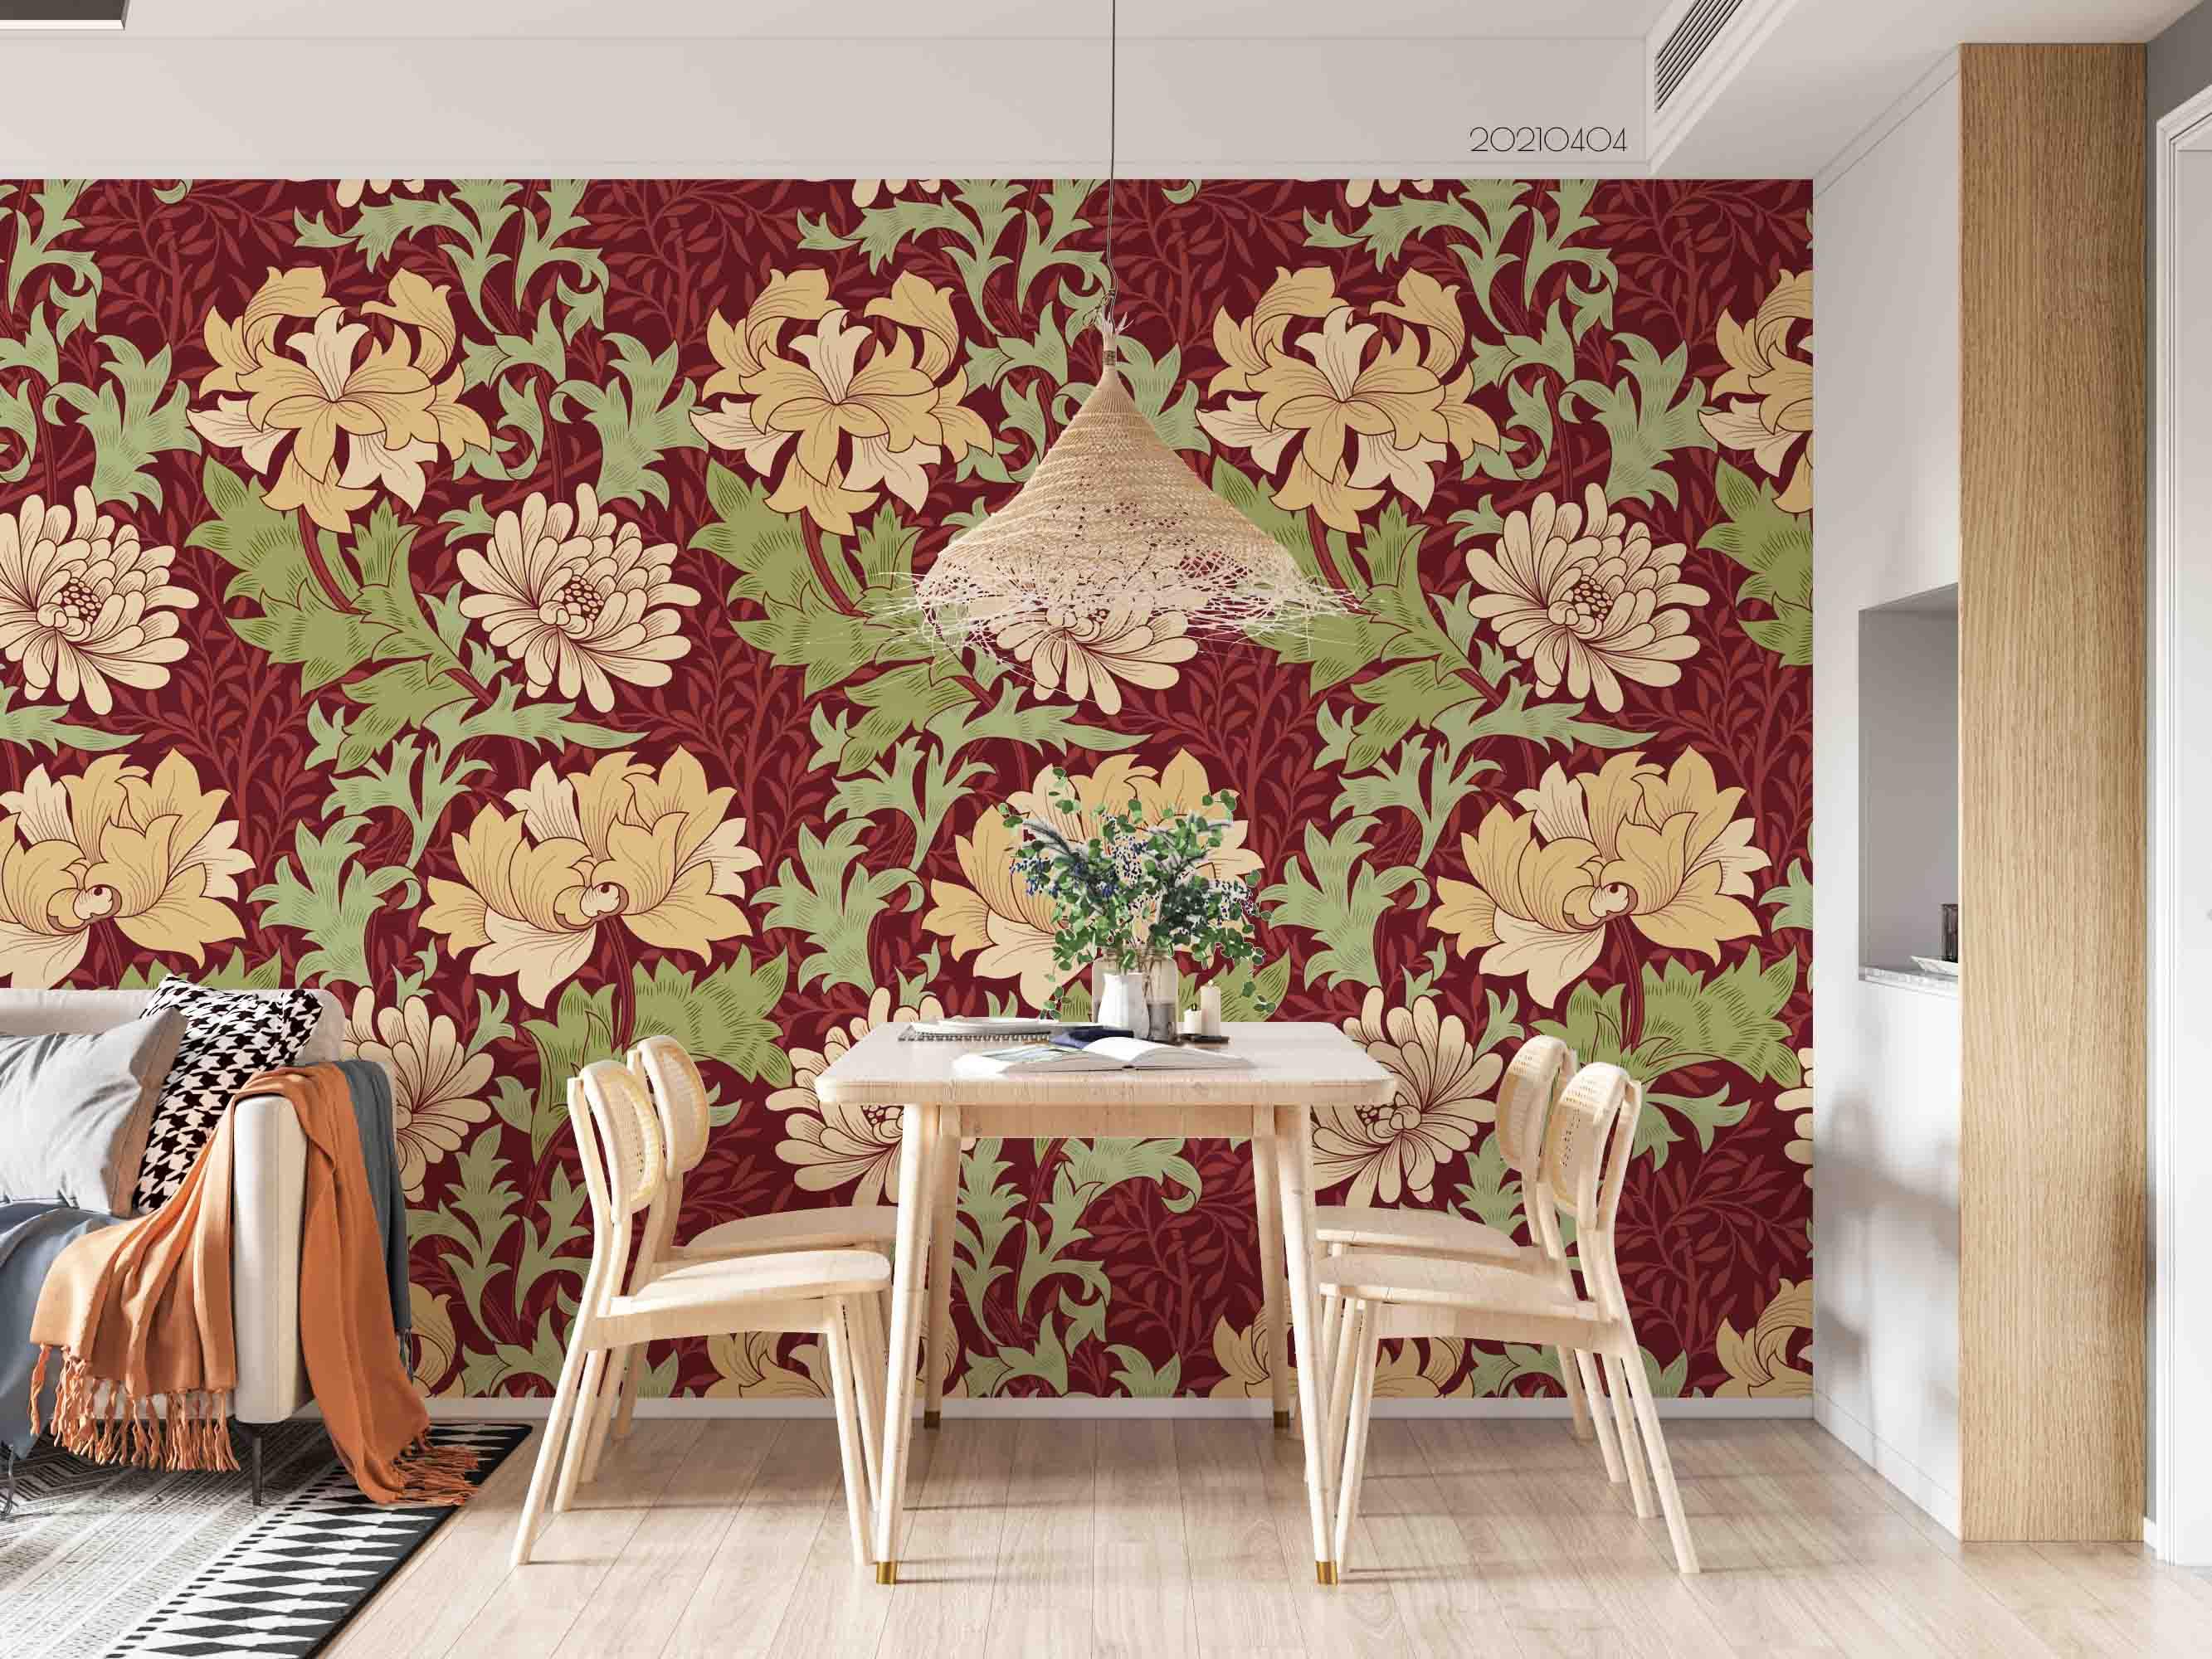 3D Vintage Leaves Floral Wall Mural Wallpaper GD 3967- Jess Art Decoration